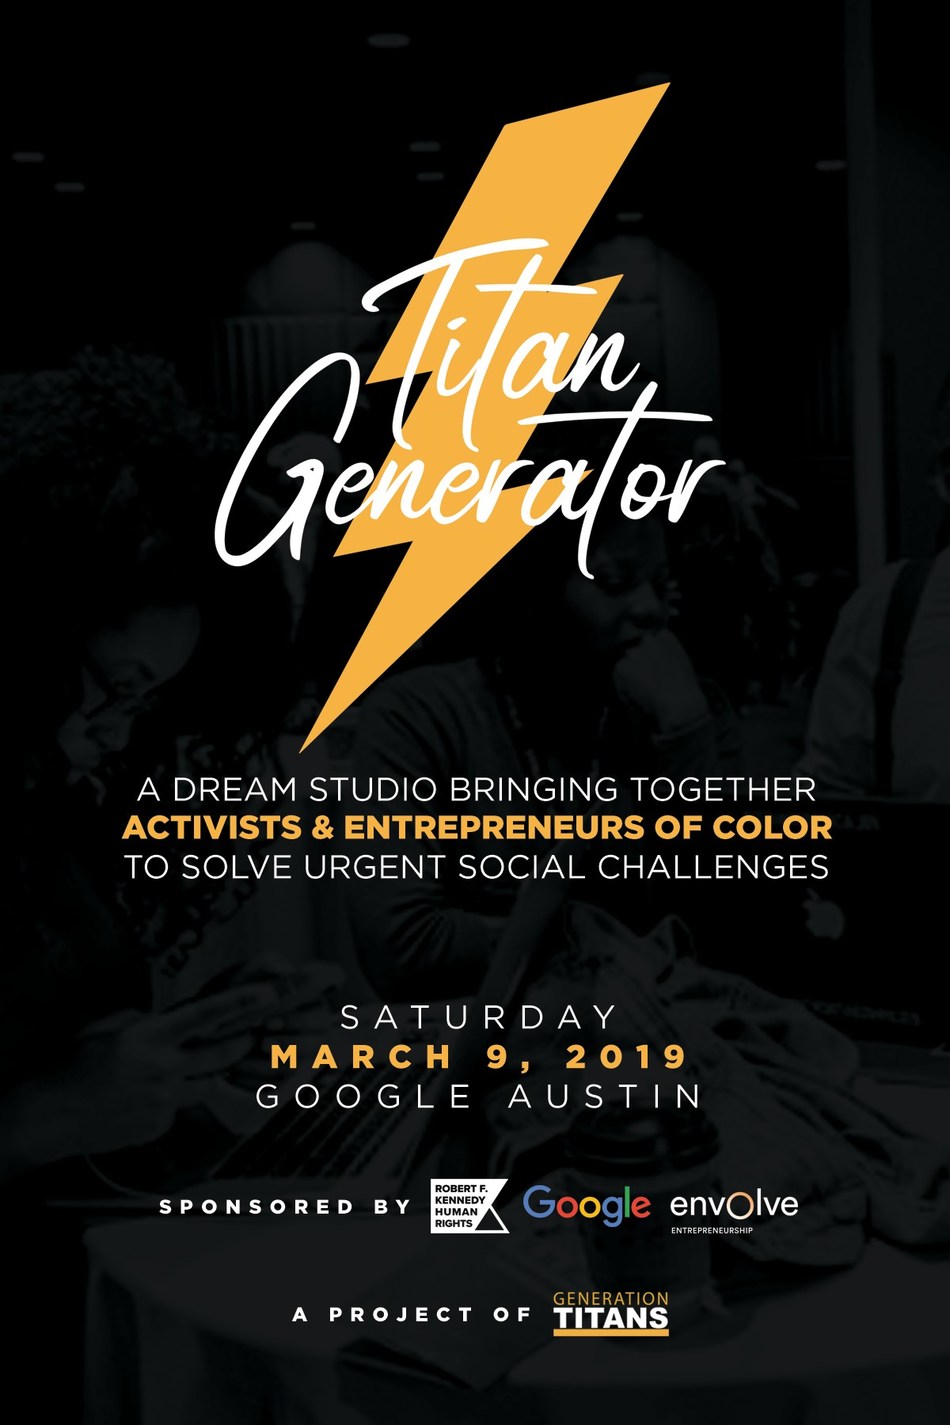 The Titan Generator event will take place on Saturday March 9 at Google Austin (PRNewsfoto/Generation Titans)